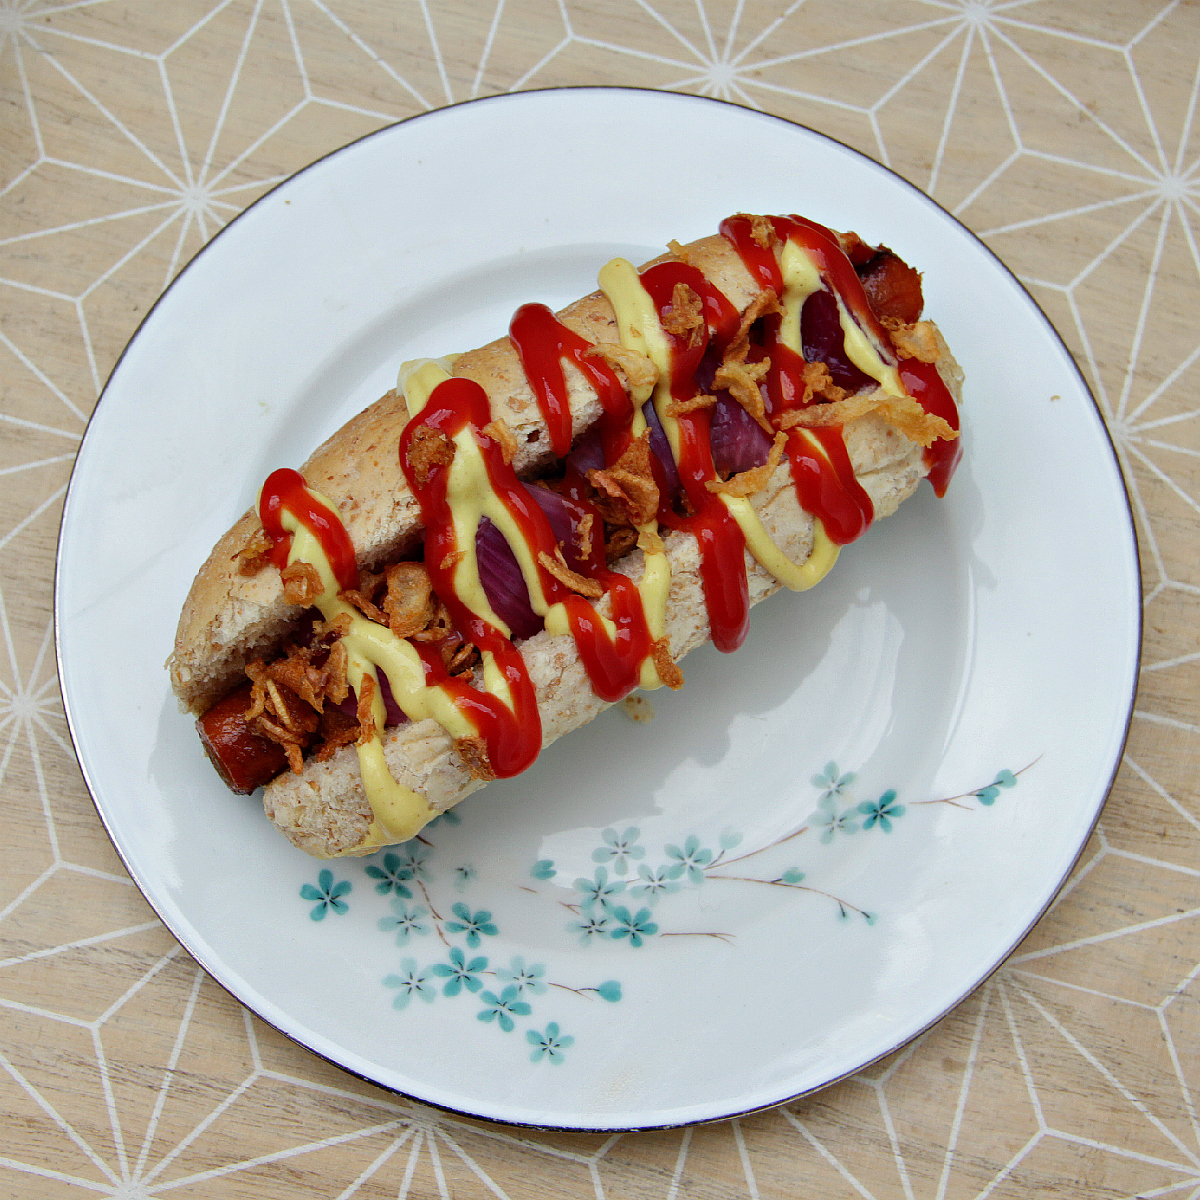 Vegan Hotdogs / Carrot Dogs - The Vegan Eskimo